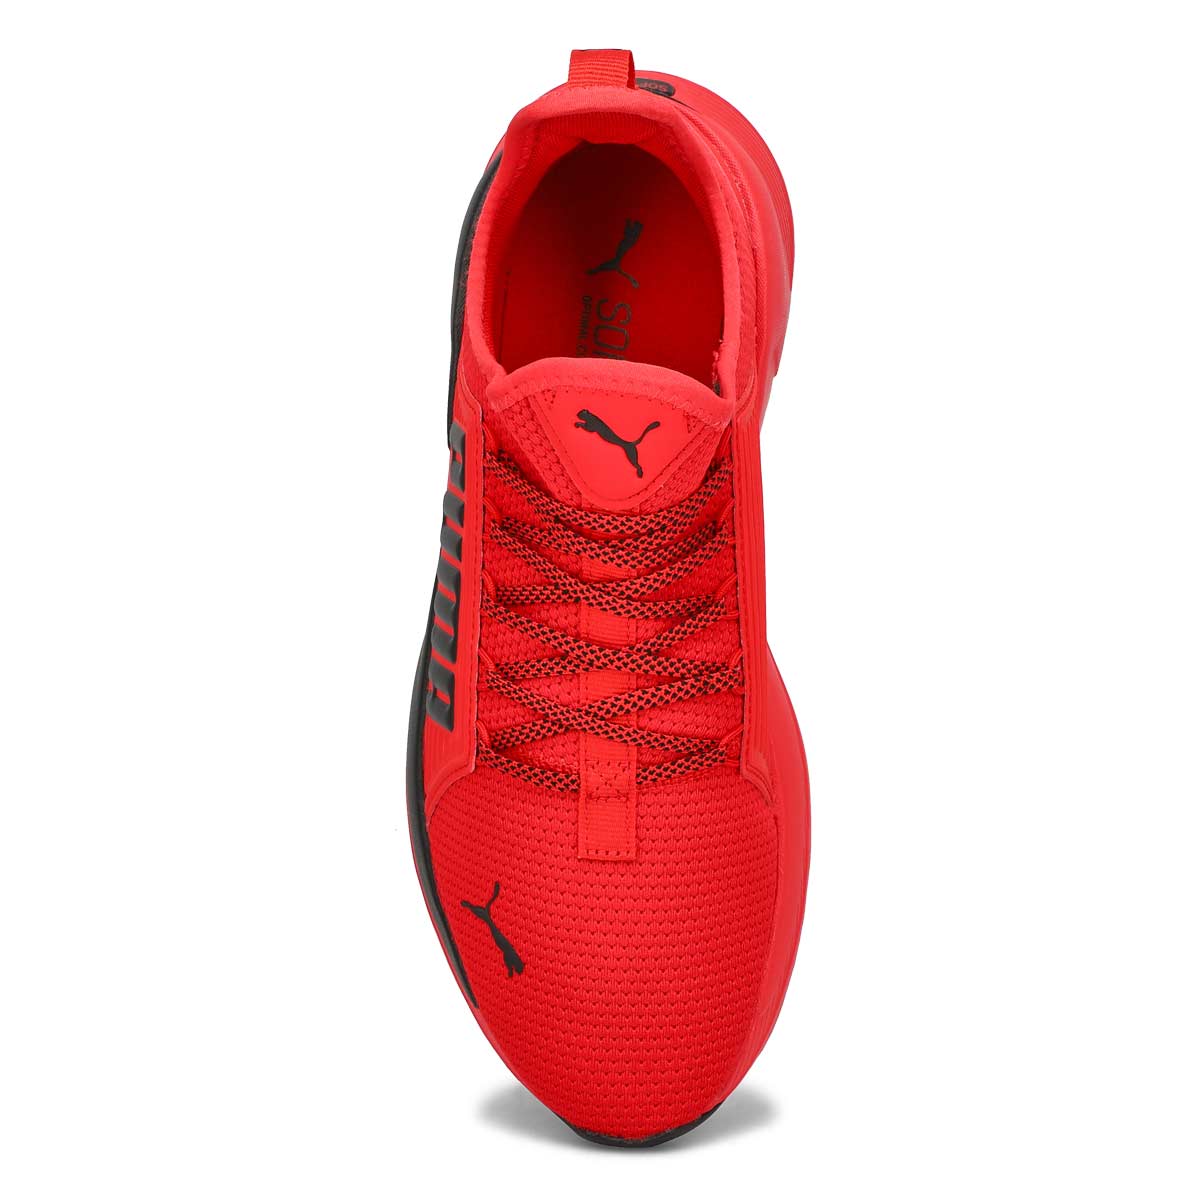 Men's Softride Premier Slip On Sneaker - Red/Black